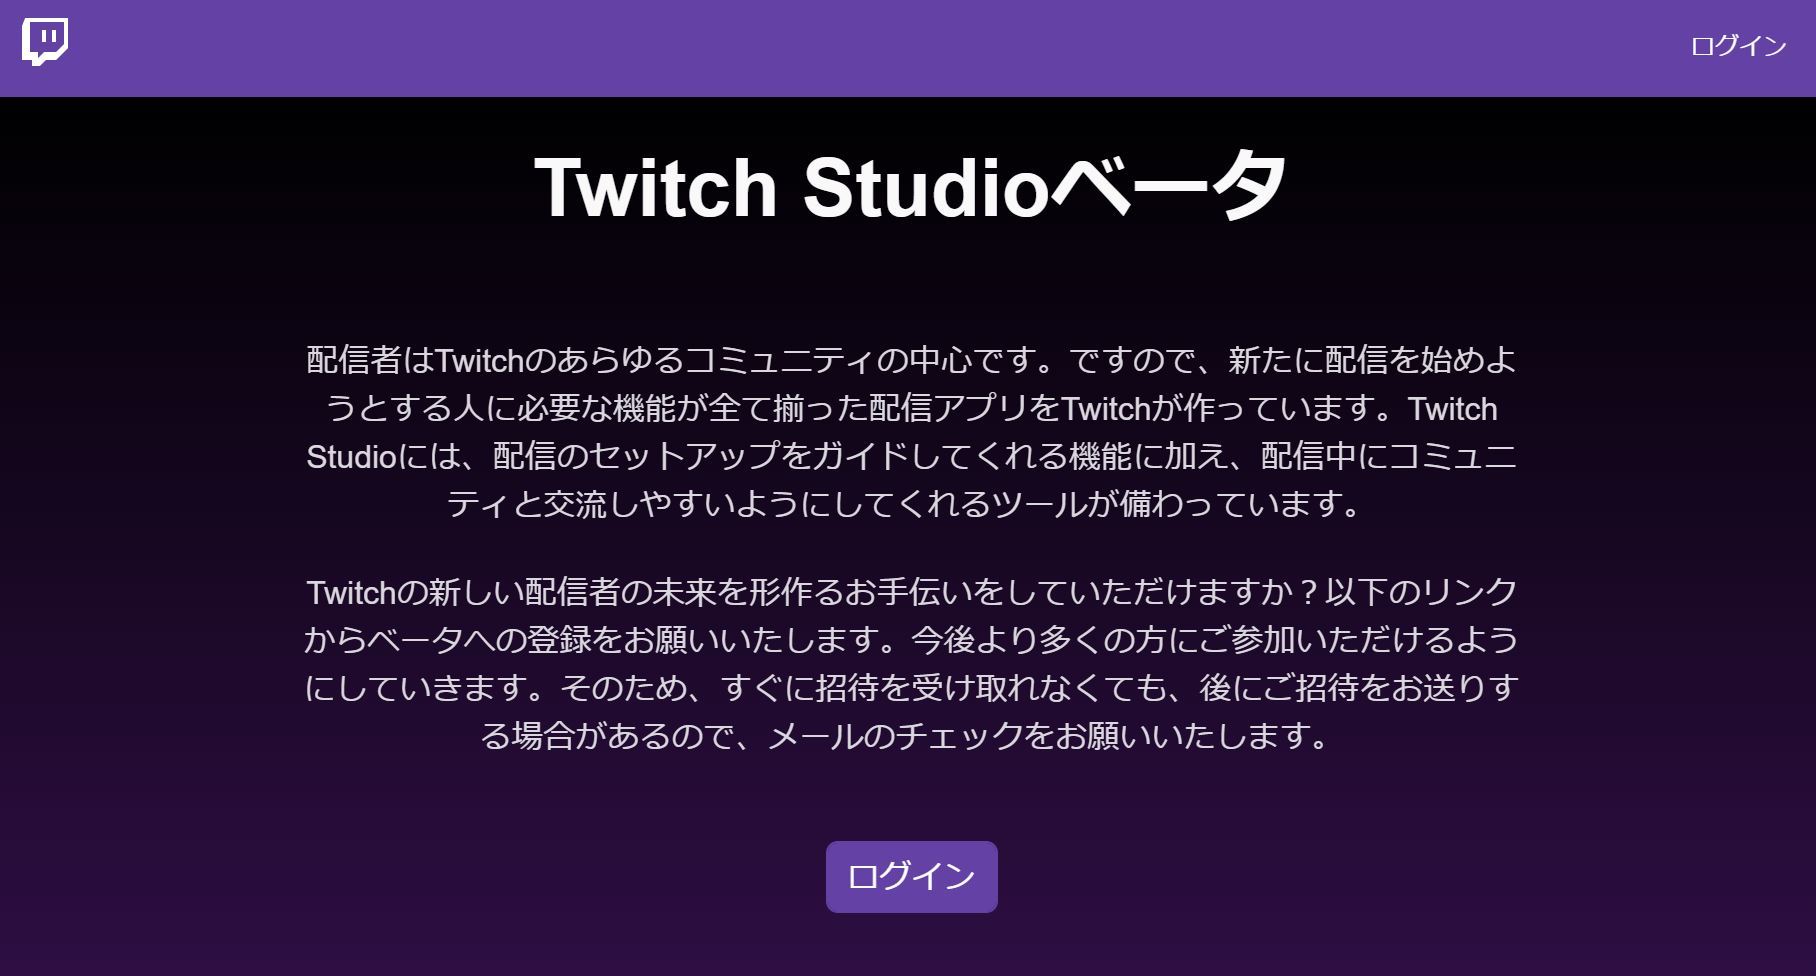 Twitch Pc用ブロードキャストアプリ Twitch Studio をb公開 Itmedia News